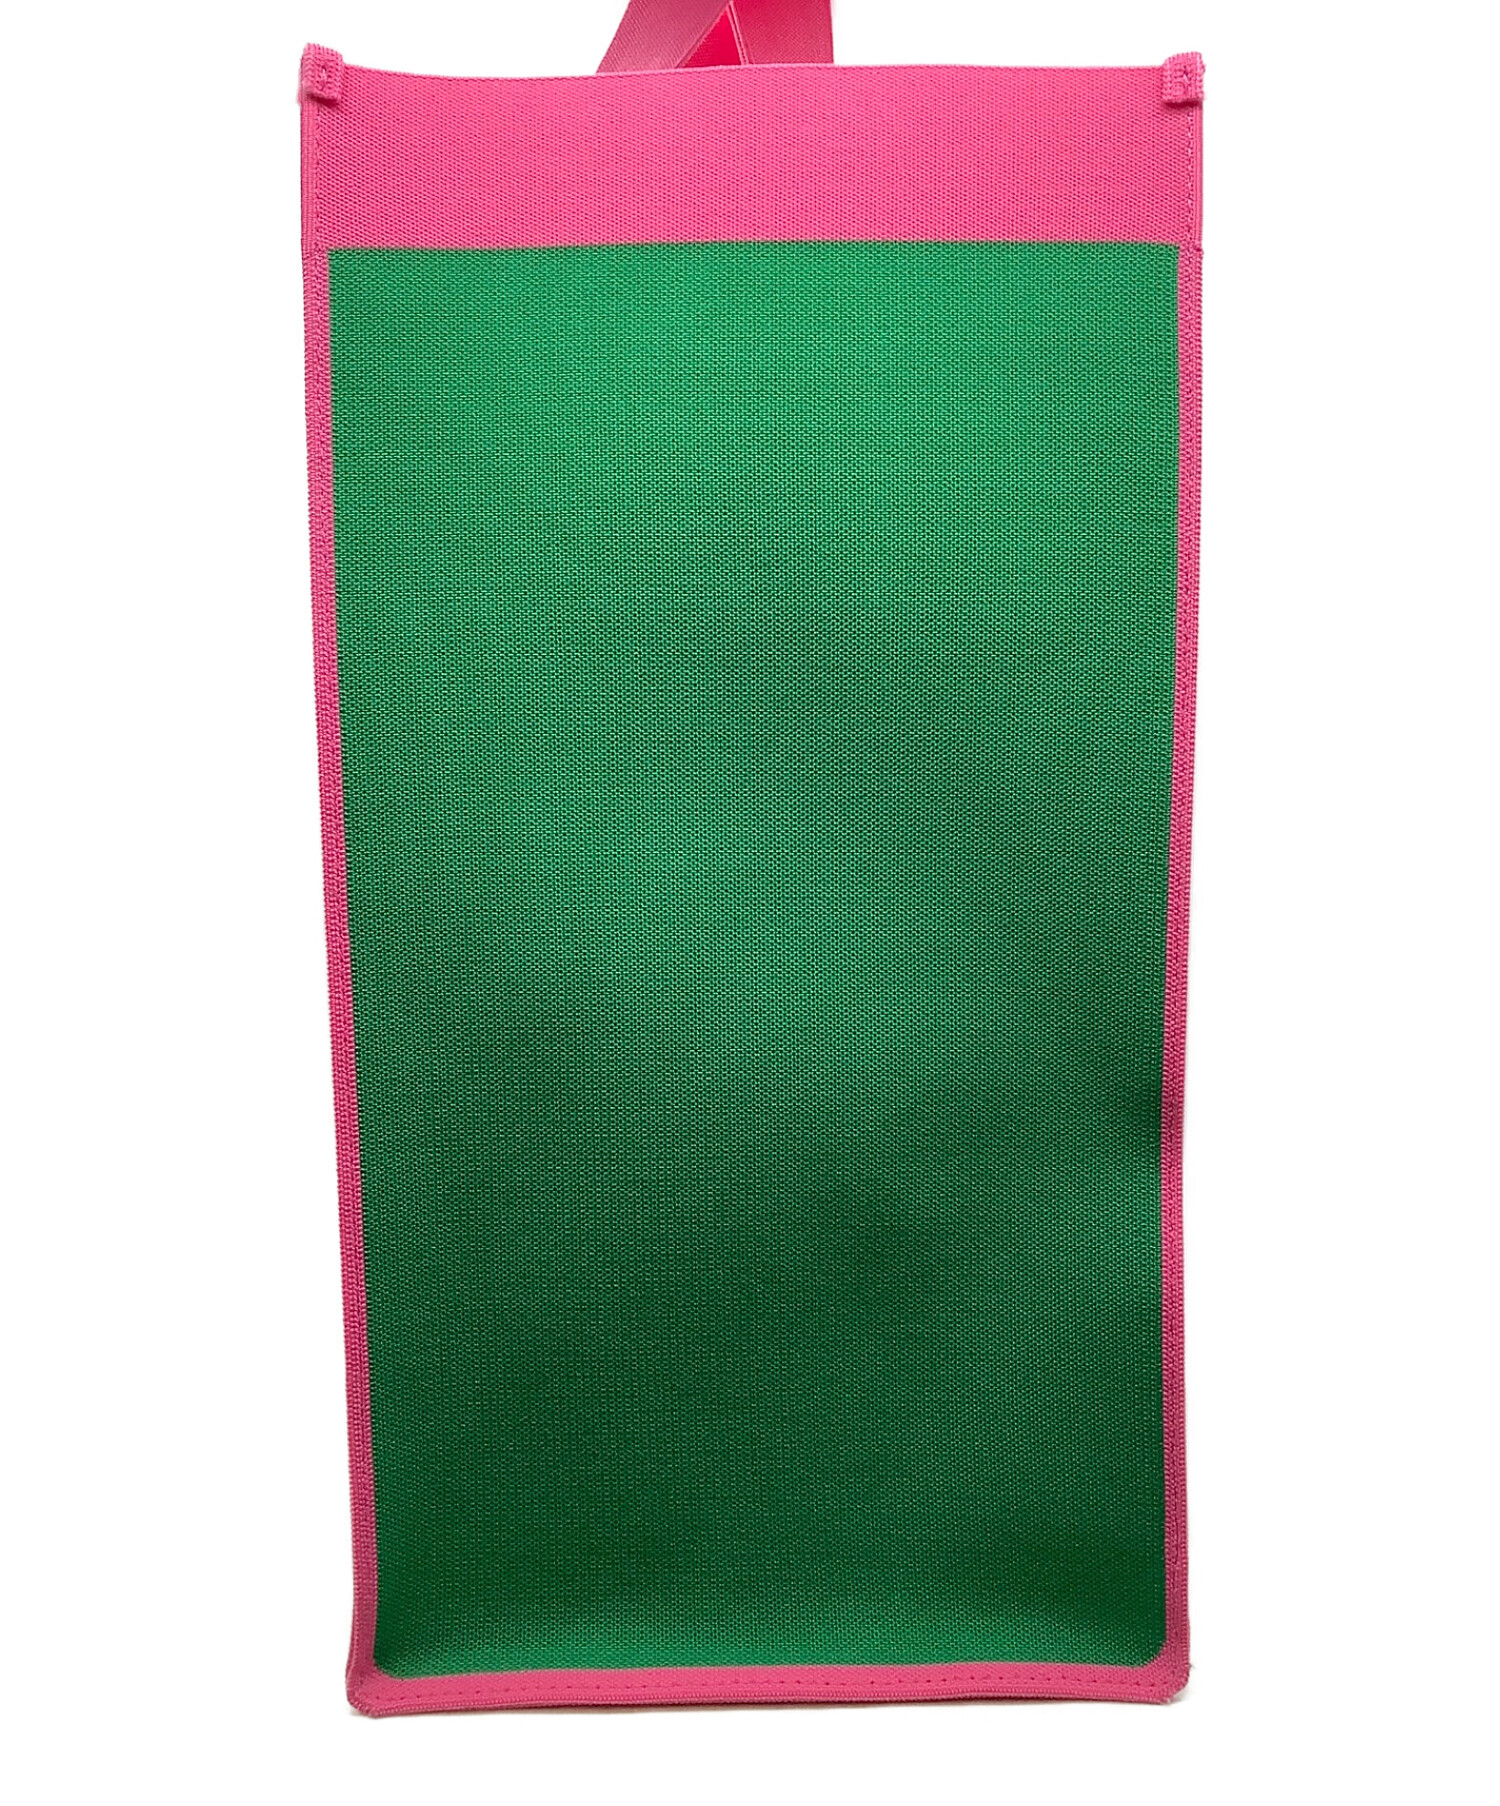 MARNI (マルニ) ジャガードショッピングバッグ ピンク×グリーン